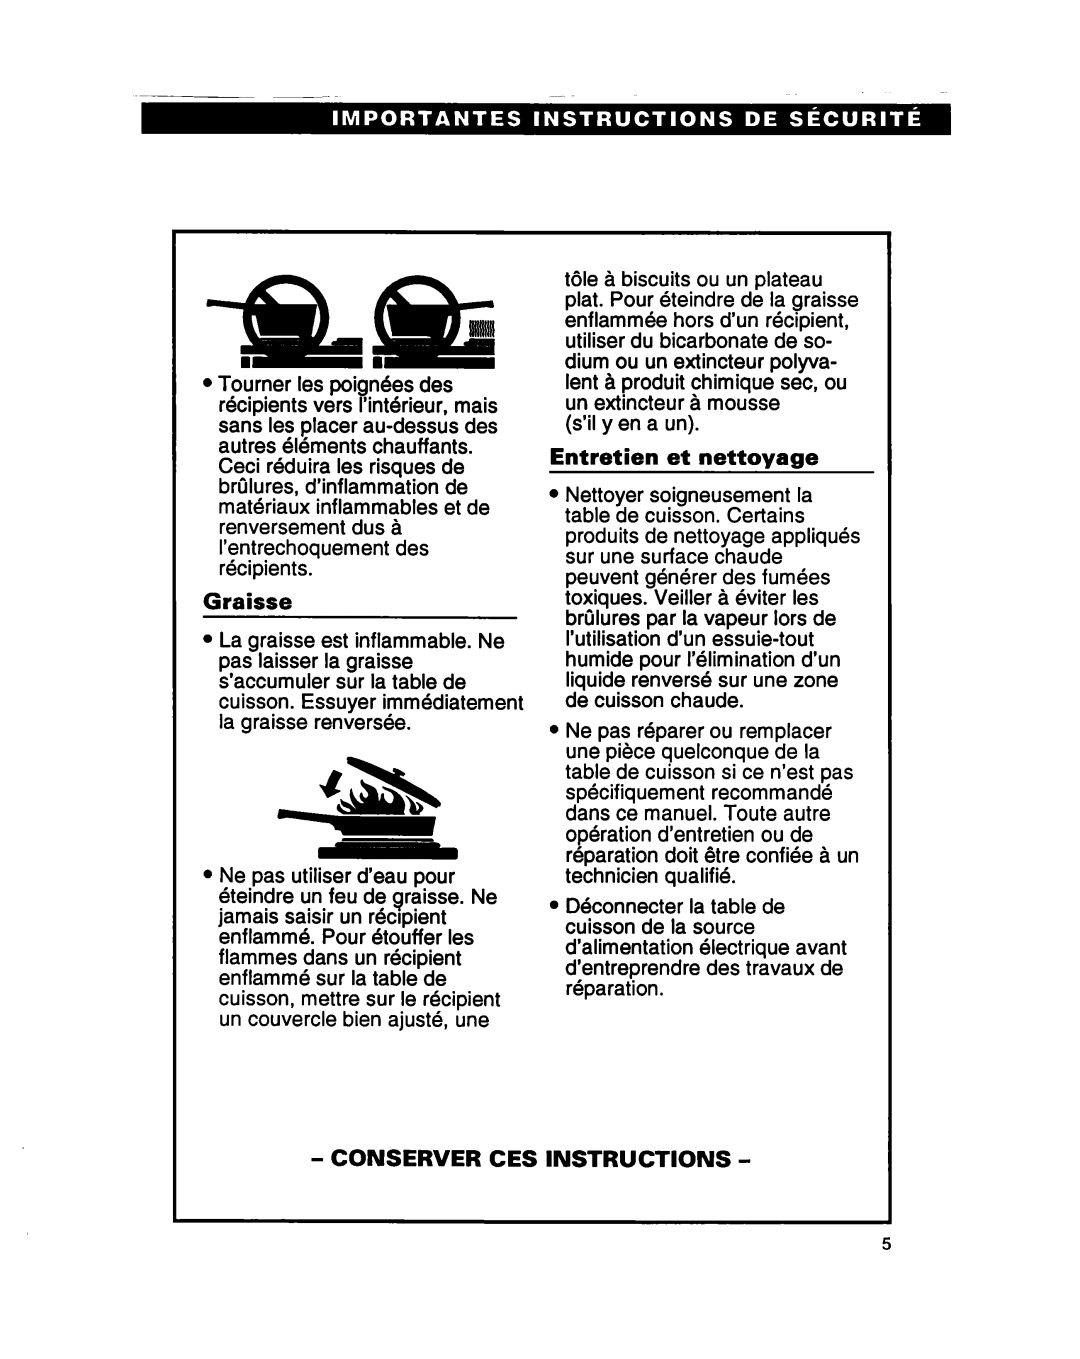 Whirlpool RC864OXB important safety instructions Graisse, Entretien et nettoyage, Conserver Ces Instructions 